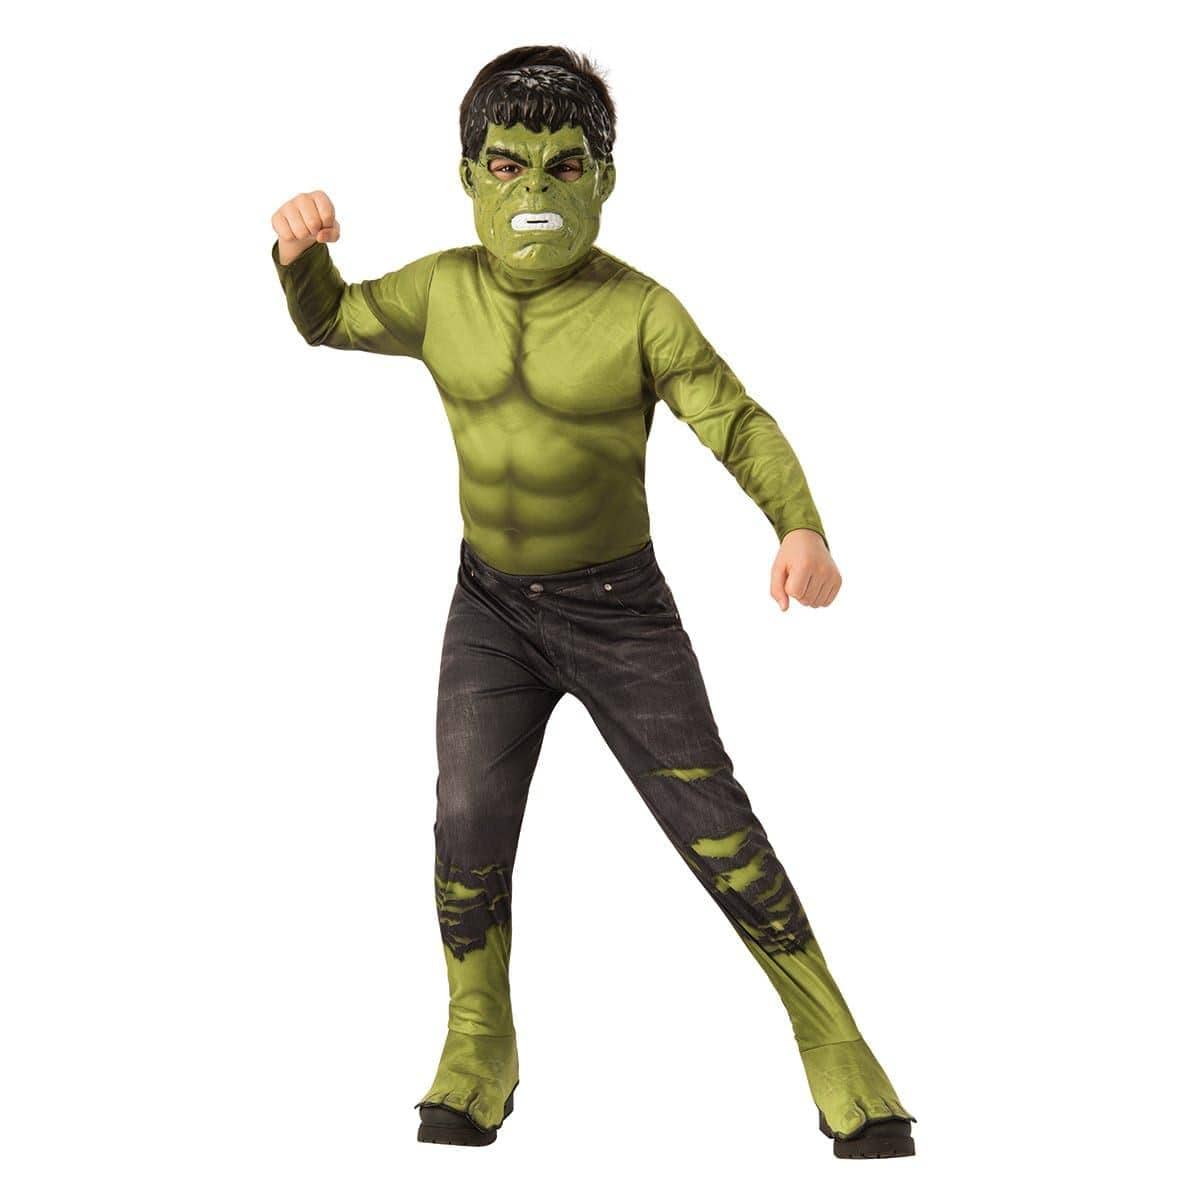 Buy Costumes Hulk Costume for Kids, Avengers 4: Endgame sold at Party Expert